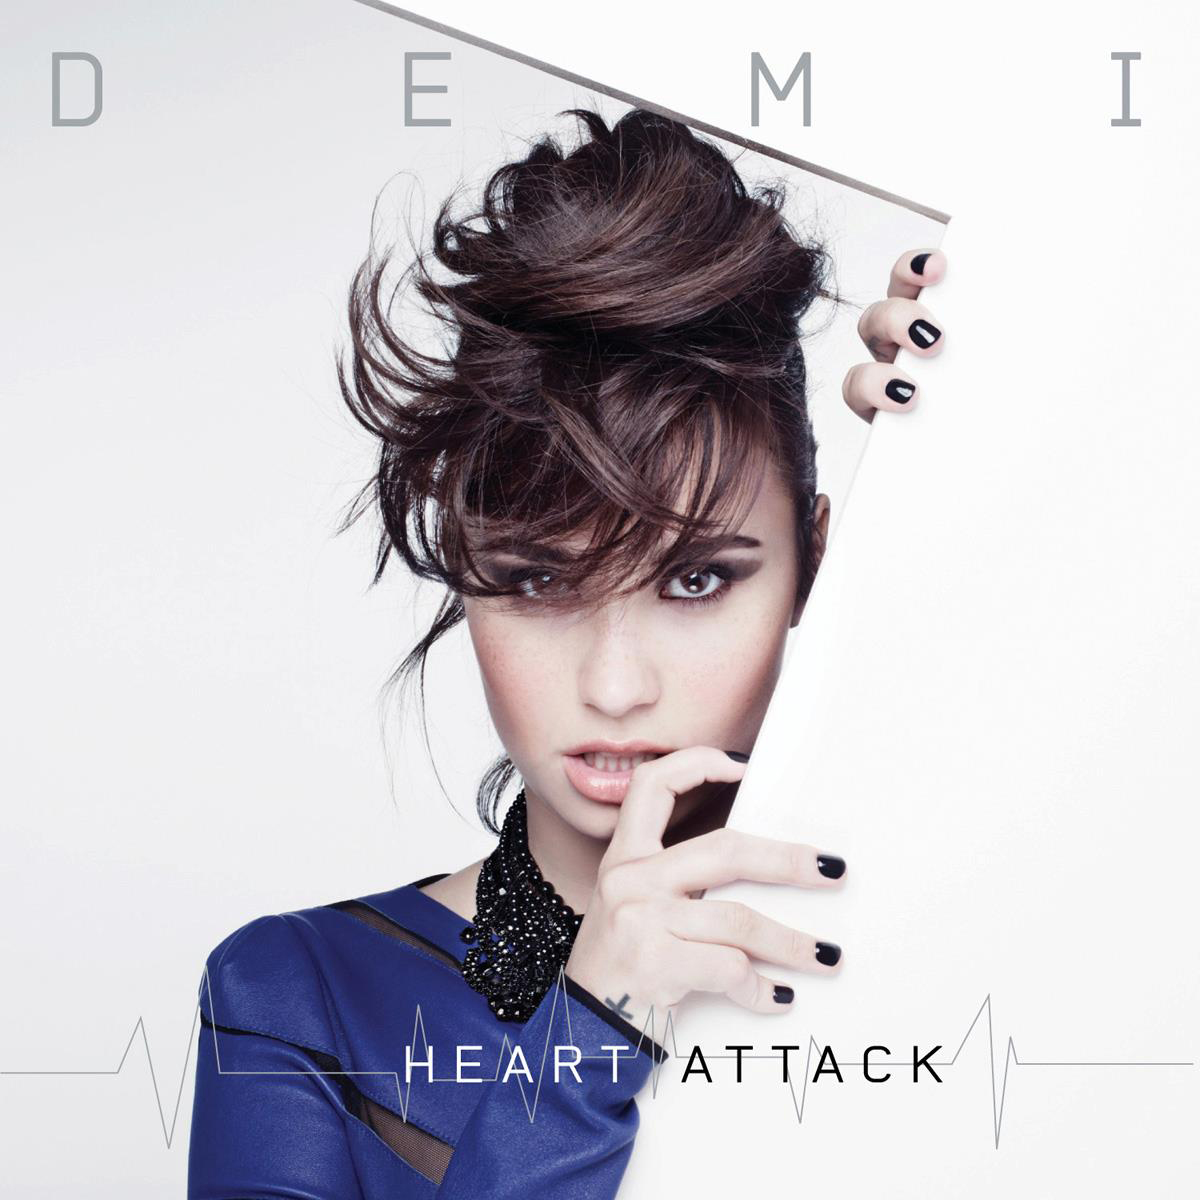 http://2.bp.blogspot.com/-m05-2xA3B14/URqDjLe1aiI/AAAAAAAASOI/nnE_WqulwPU/s1600/Demi-Lovato-Heart-Attack-official-single-artwork-march-4-2013.jpg